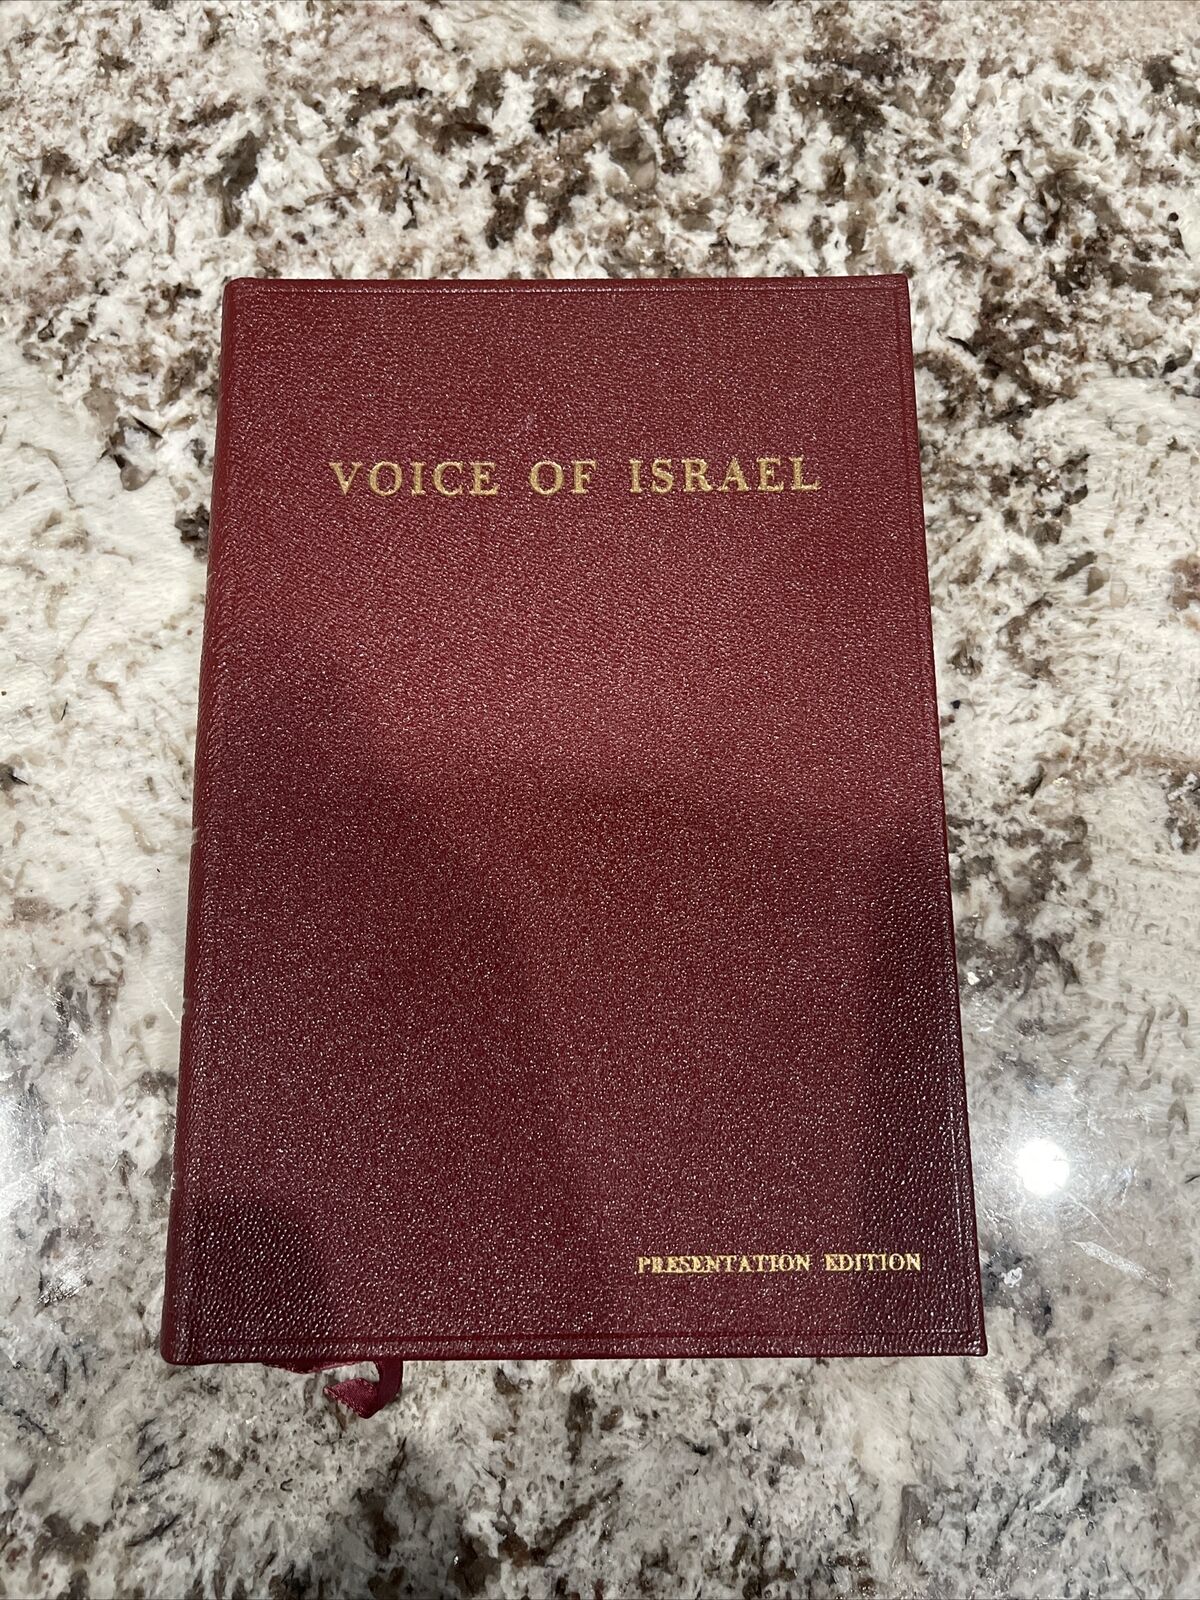 1957 Abba Eban Presentation Edition SIGN. AUTOGRAPH Book אבא אבן Voice of Israel